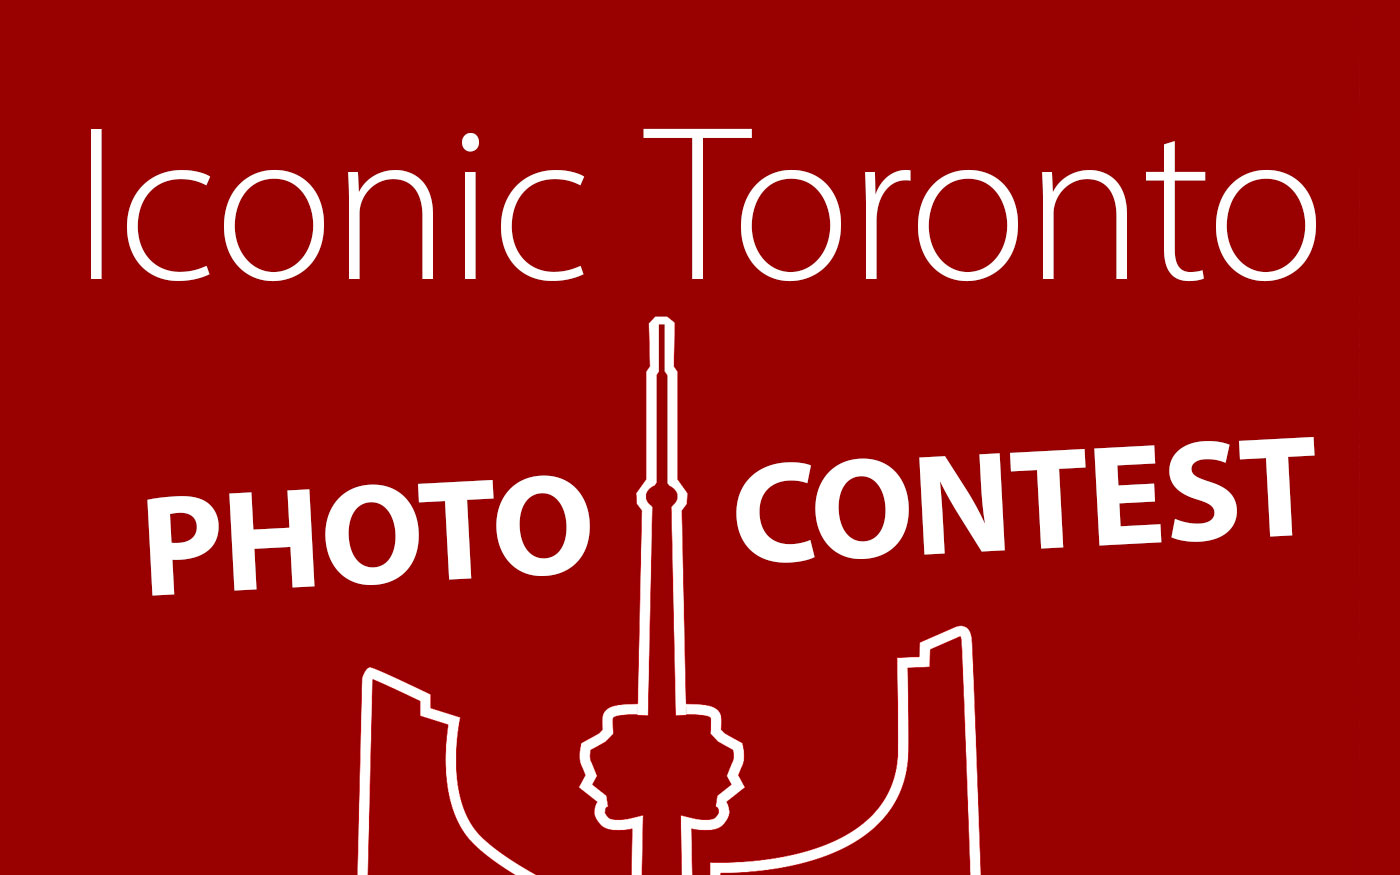 Iconic Toronto Photo Contest by Tdot Shots